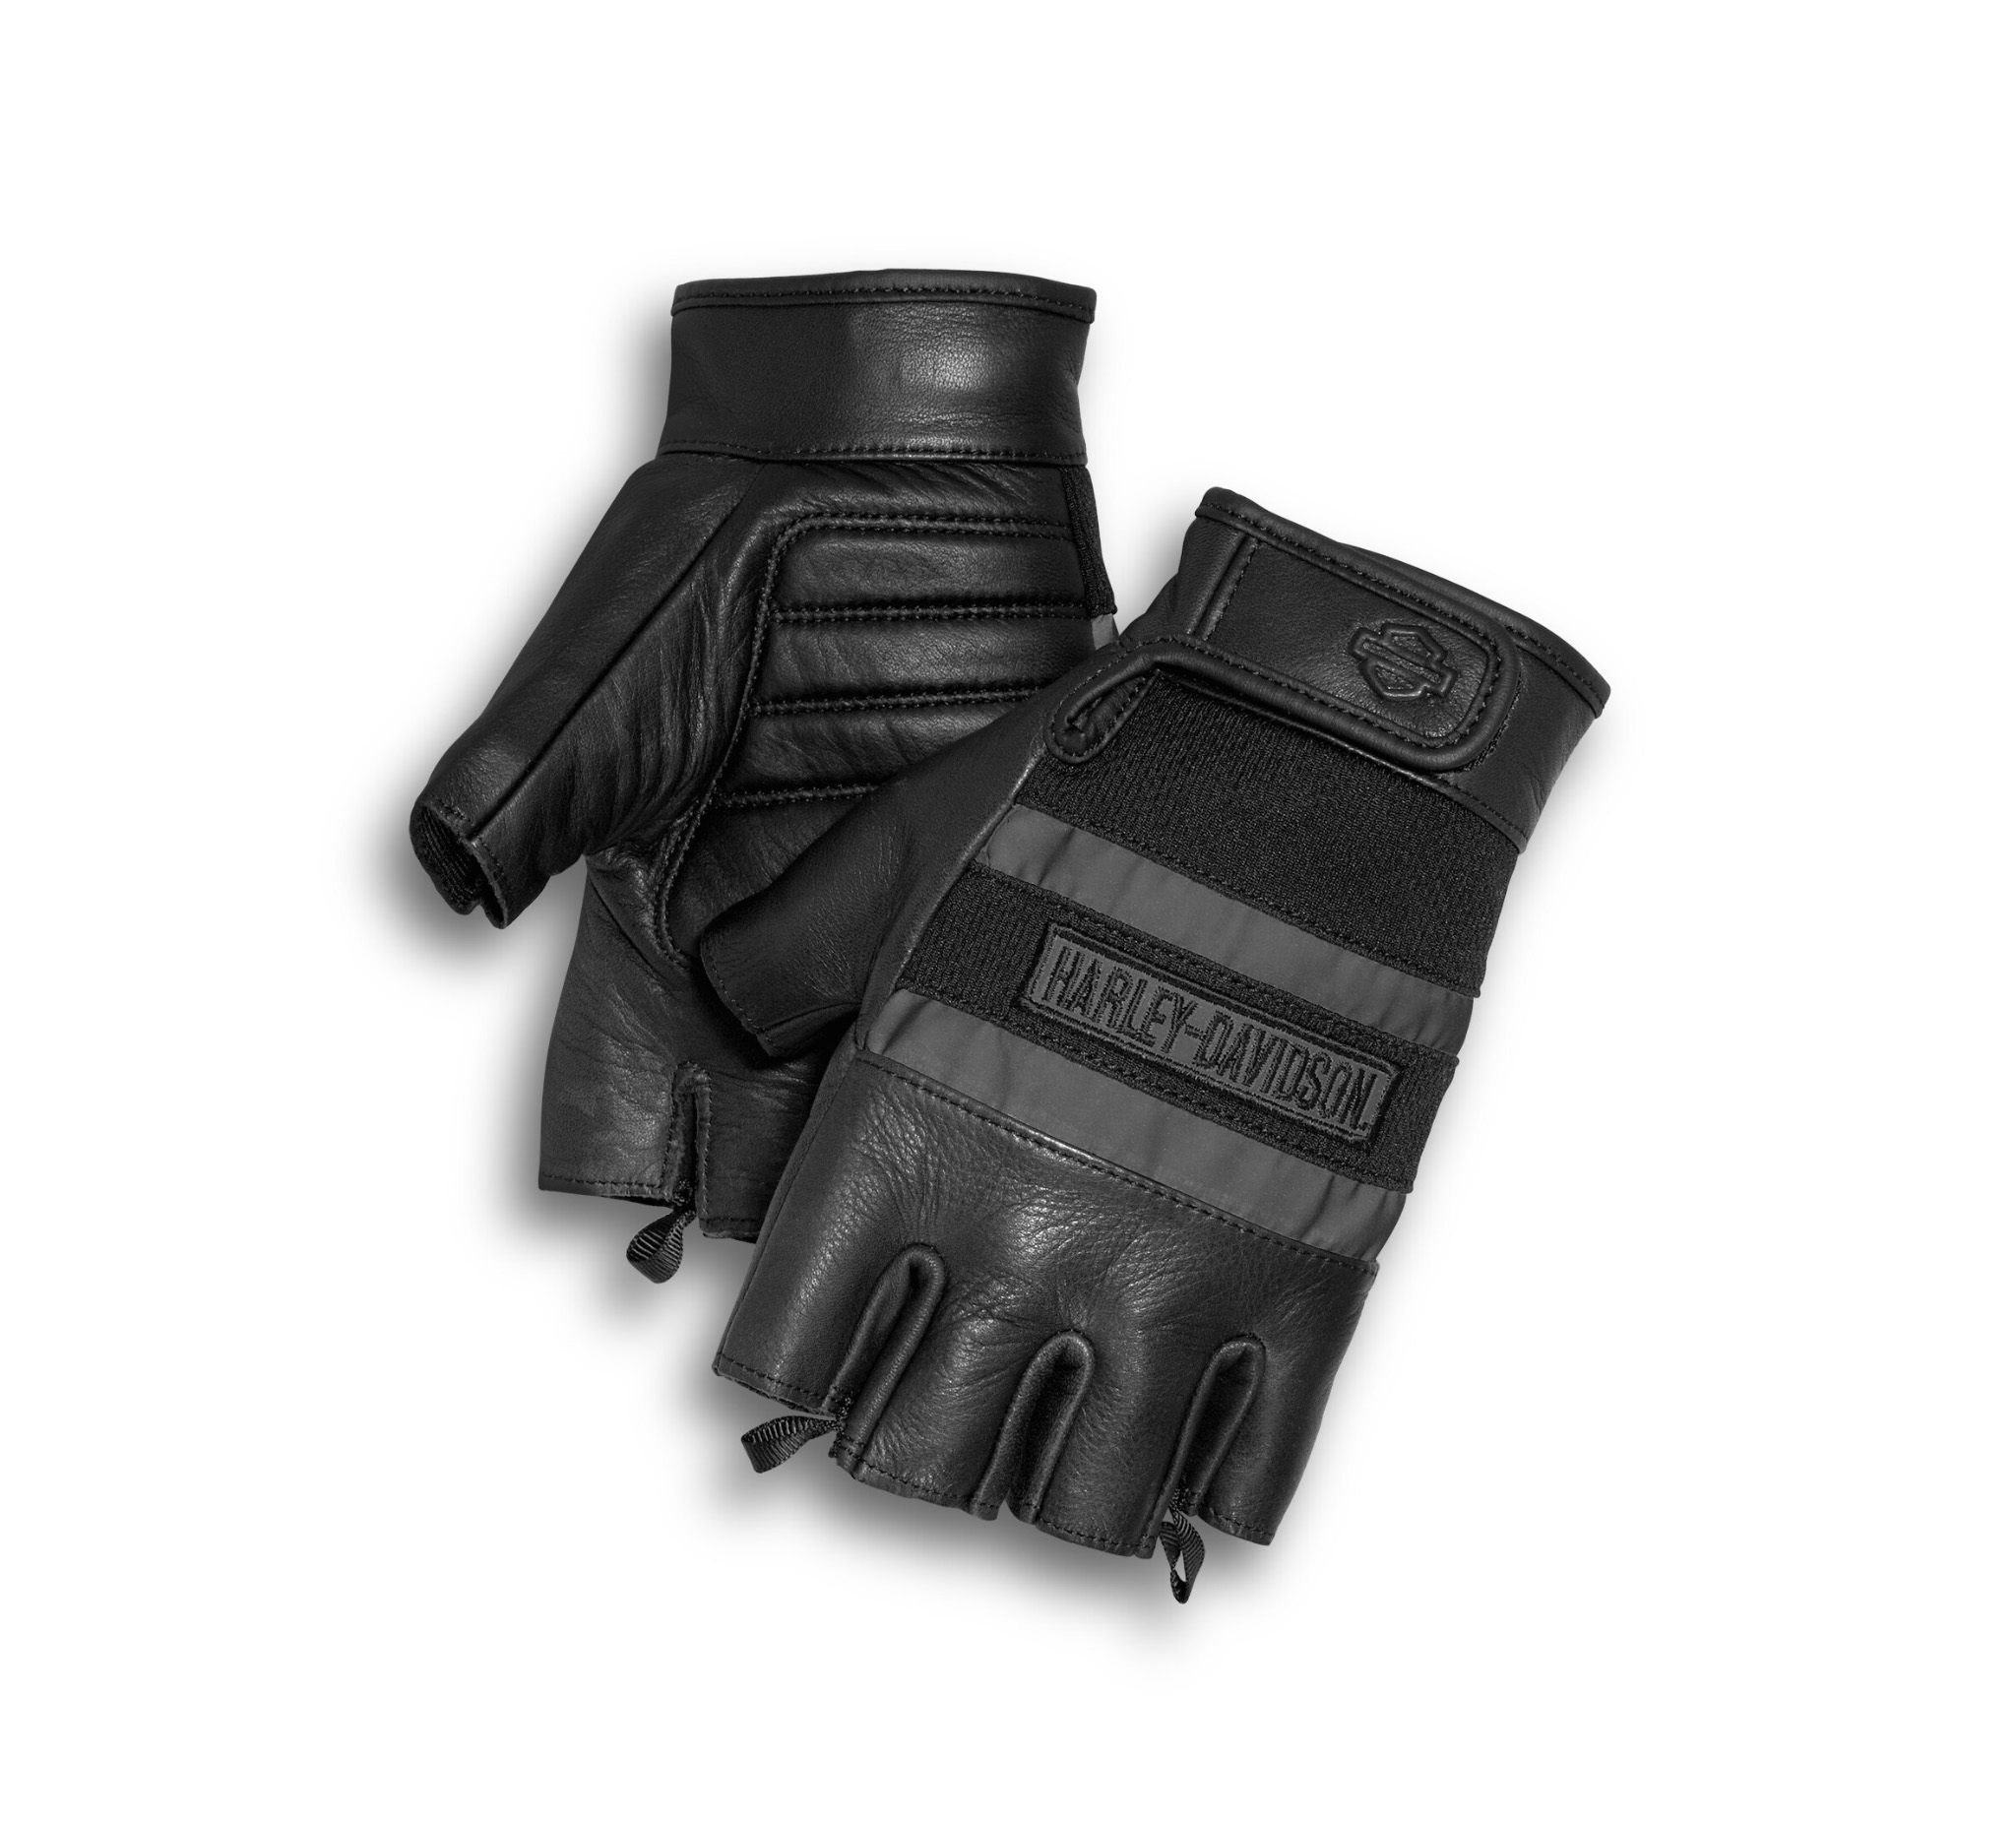 Harley Davidson Fingerless Motorcycle Gloves Promotion Off67